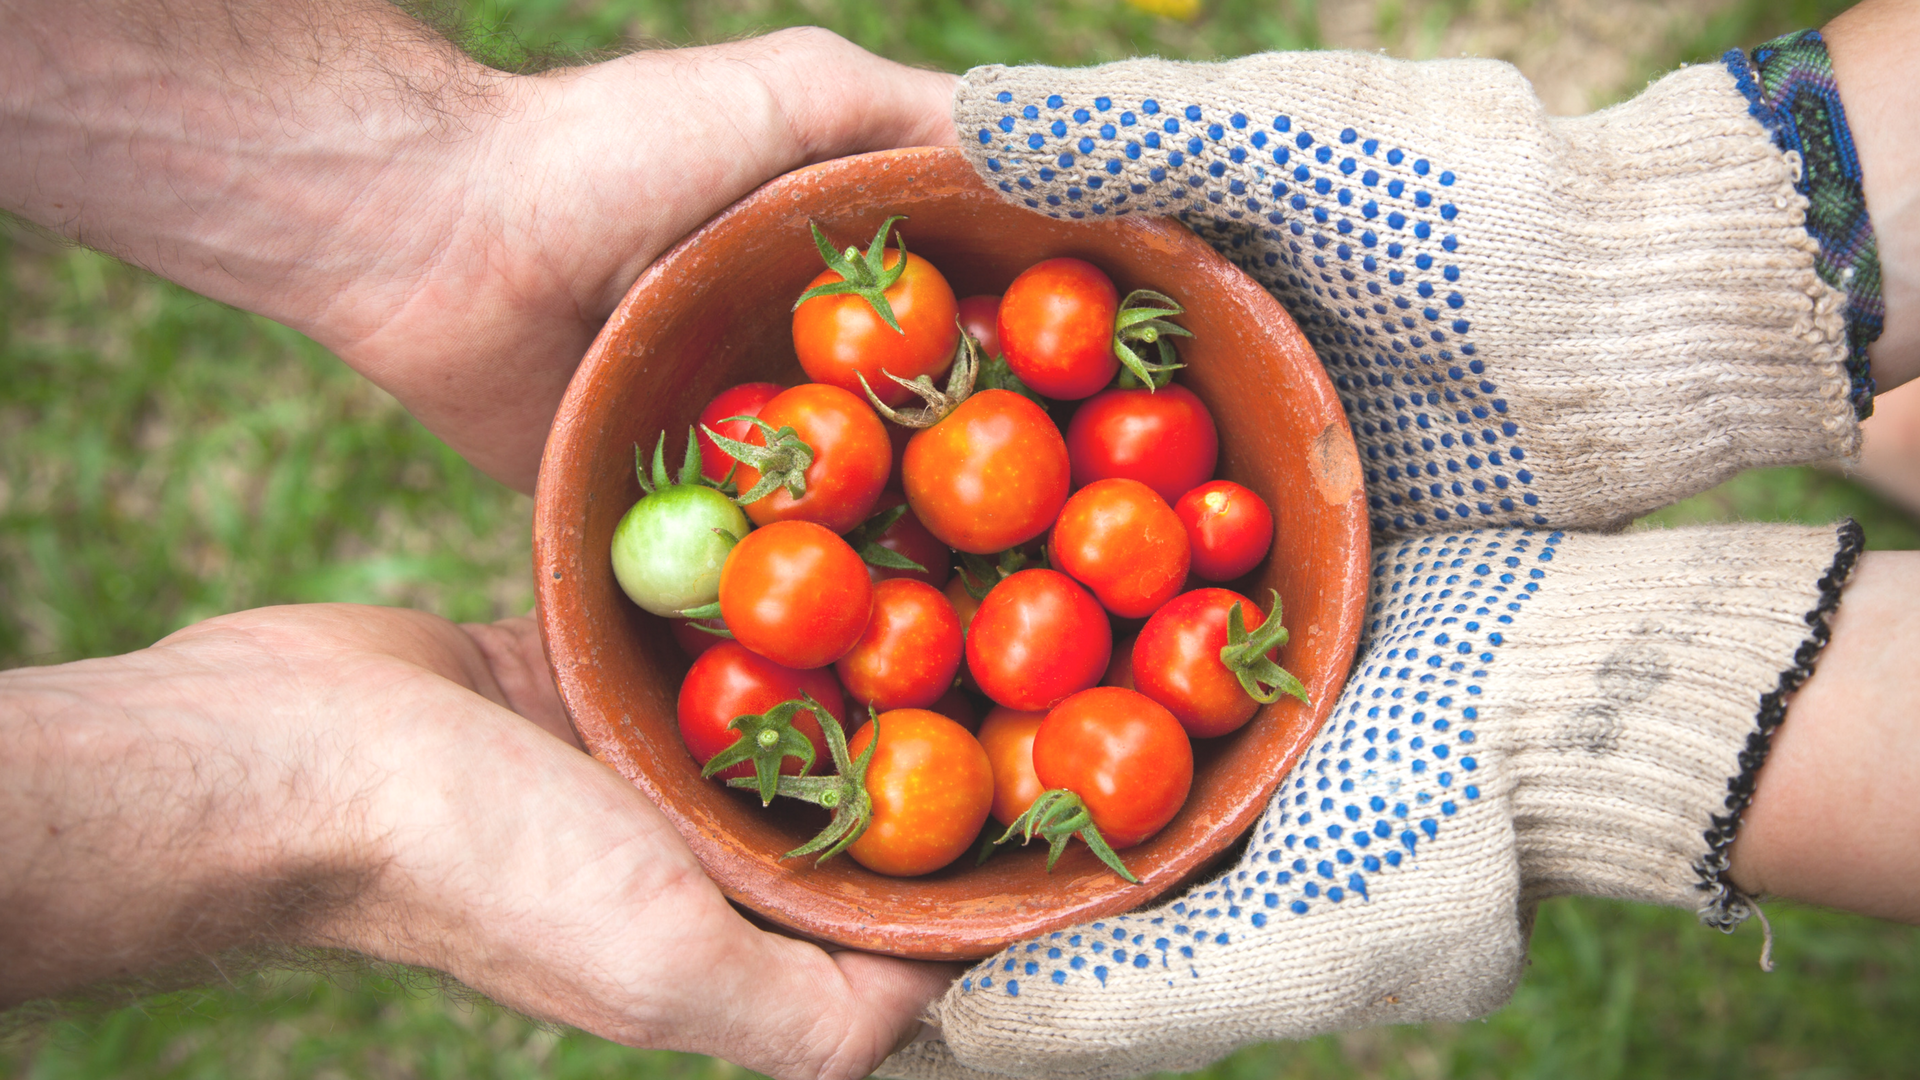 Photo Credit: Elaine Casap via Unsplash - Vit C in tomatoes: 13.7mg/100g